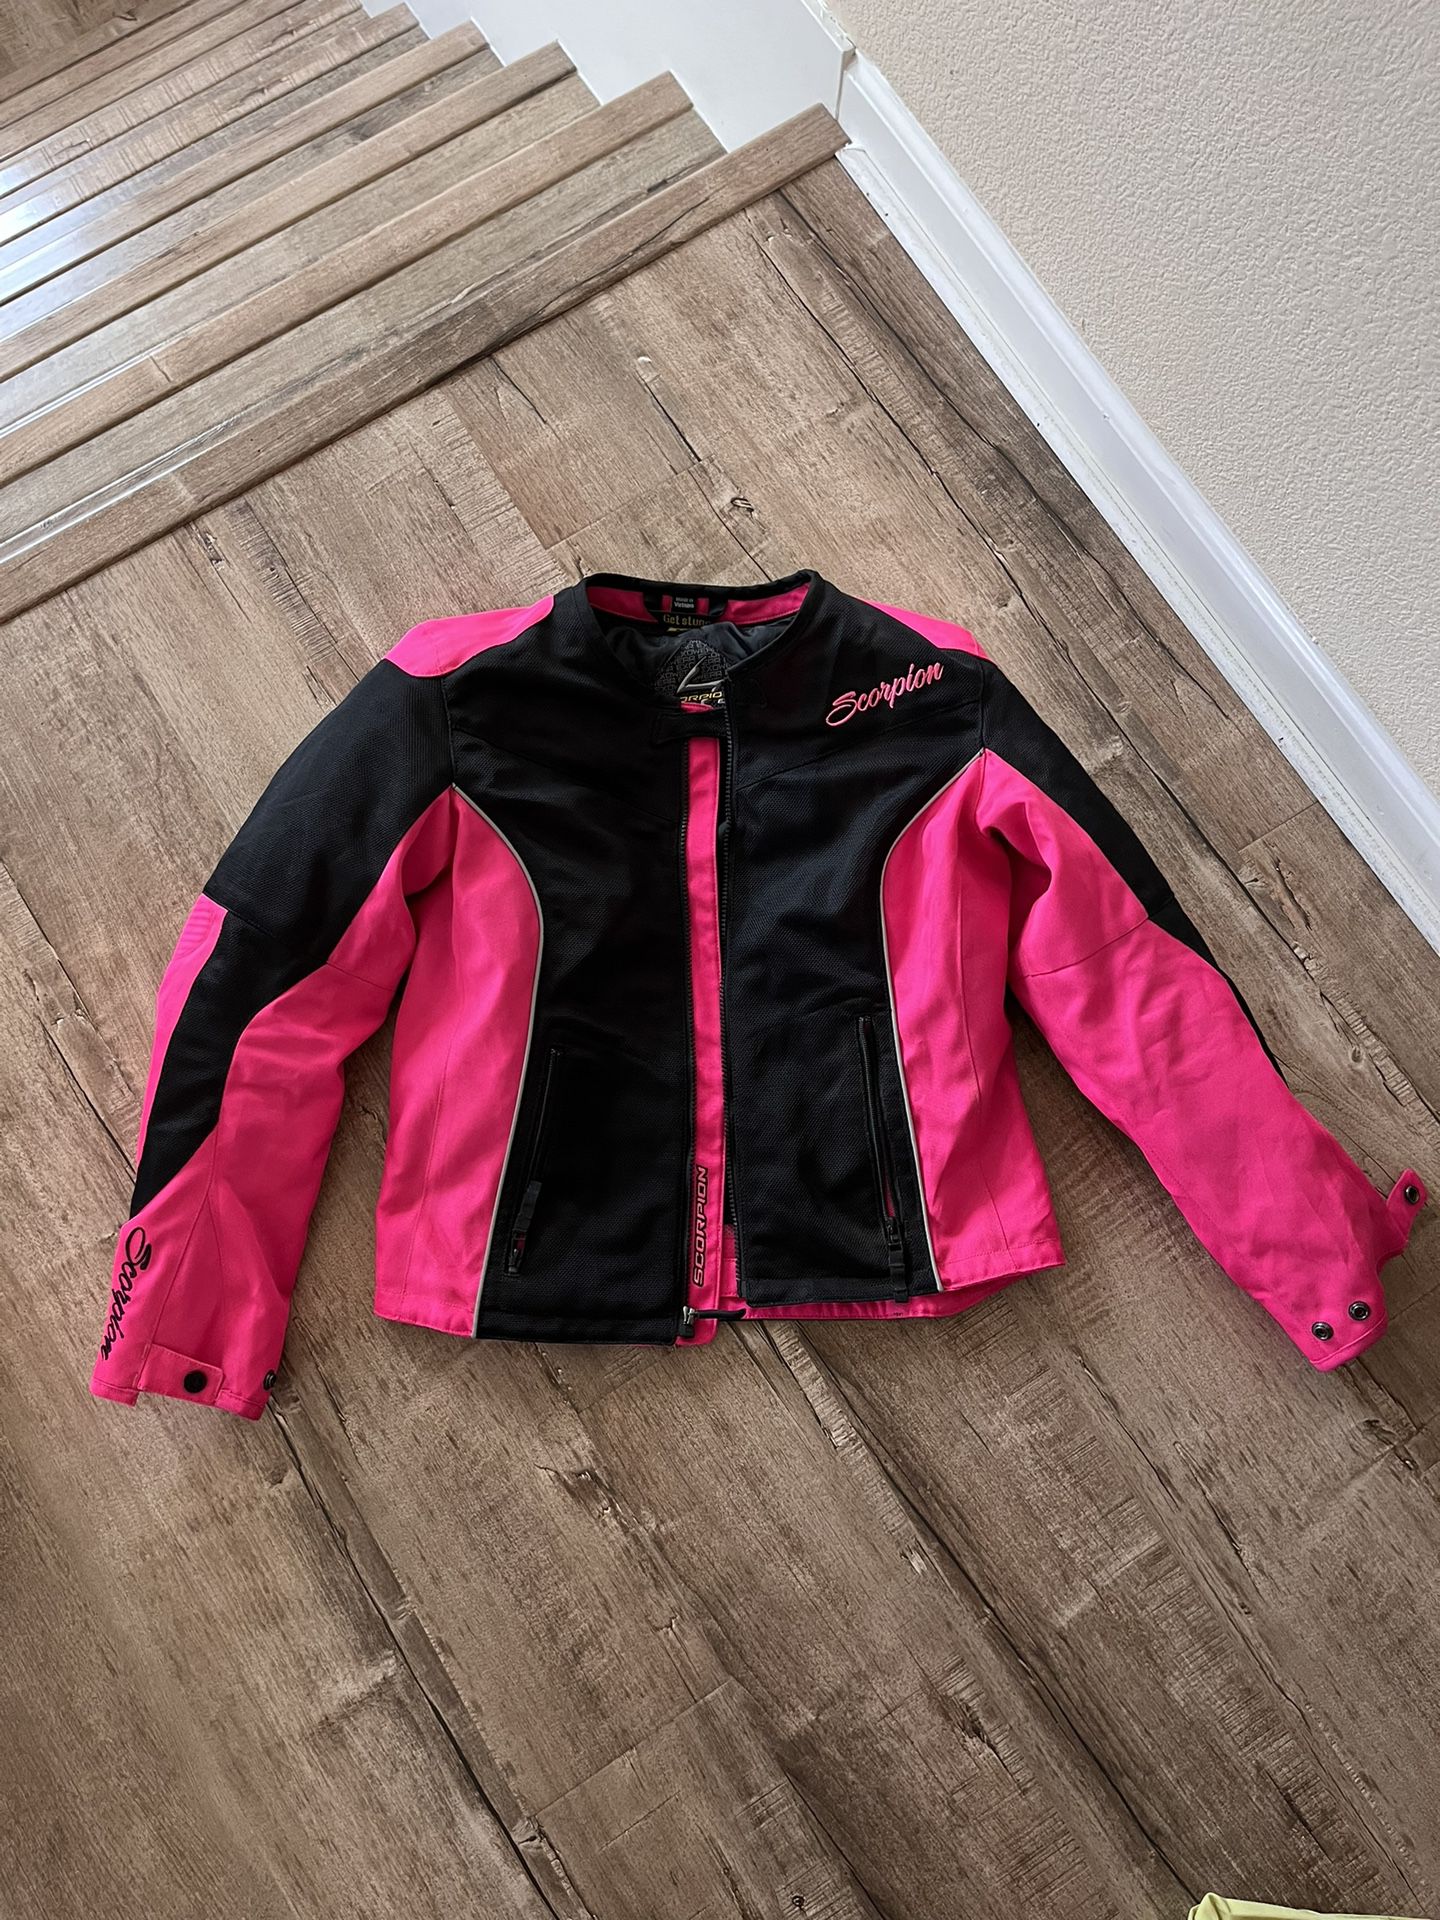 ScorpionEXO Women’s Motorcycle Jacket 